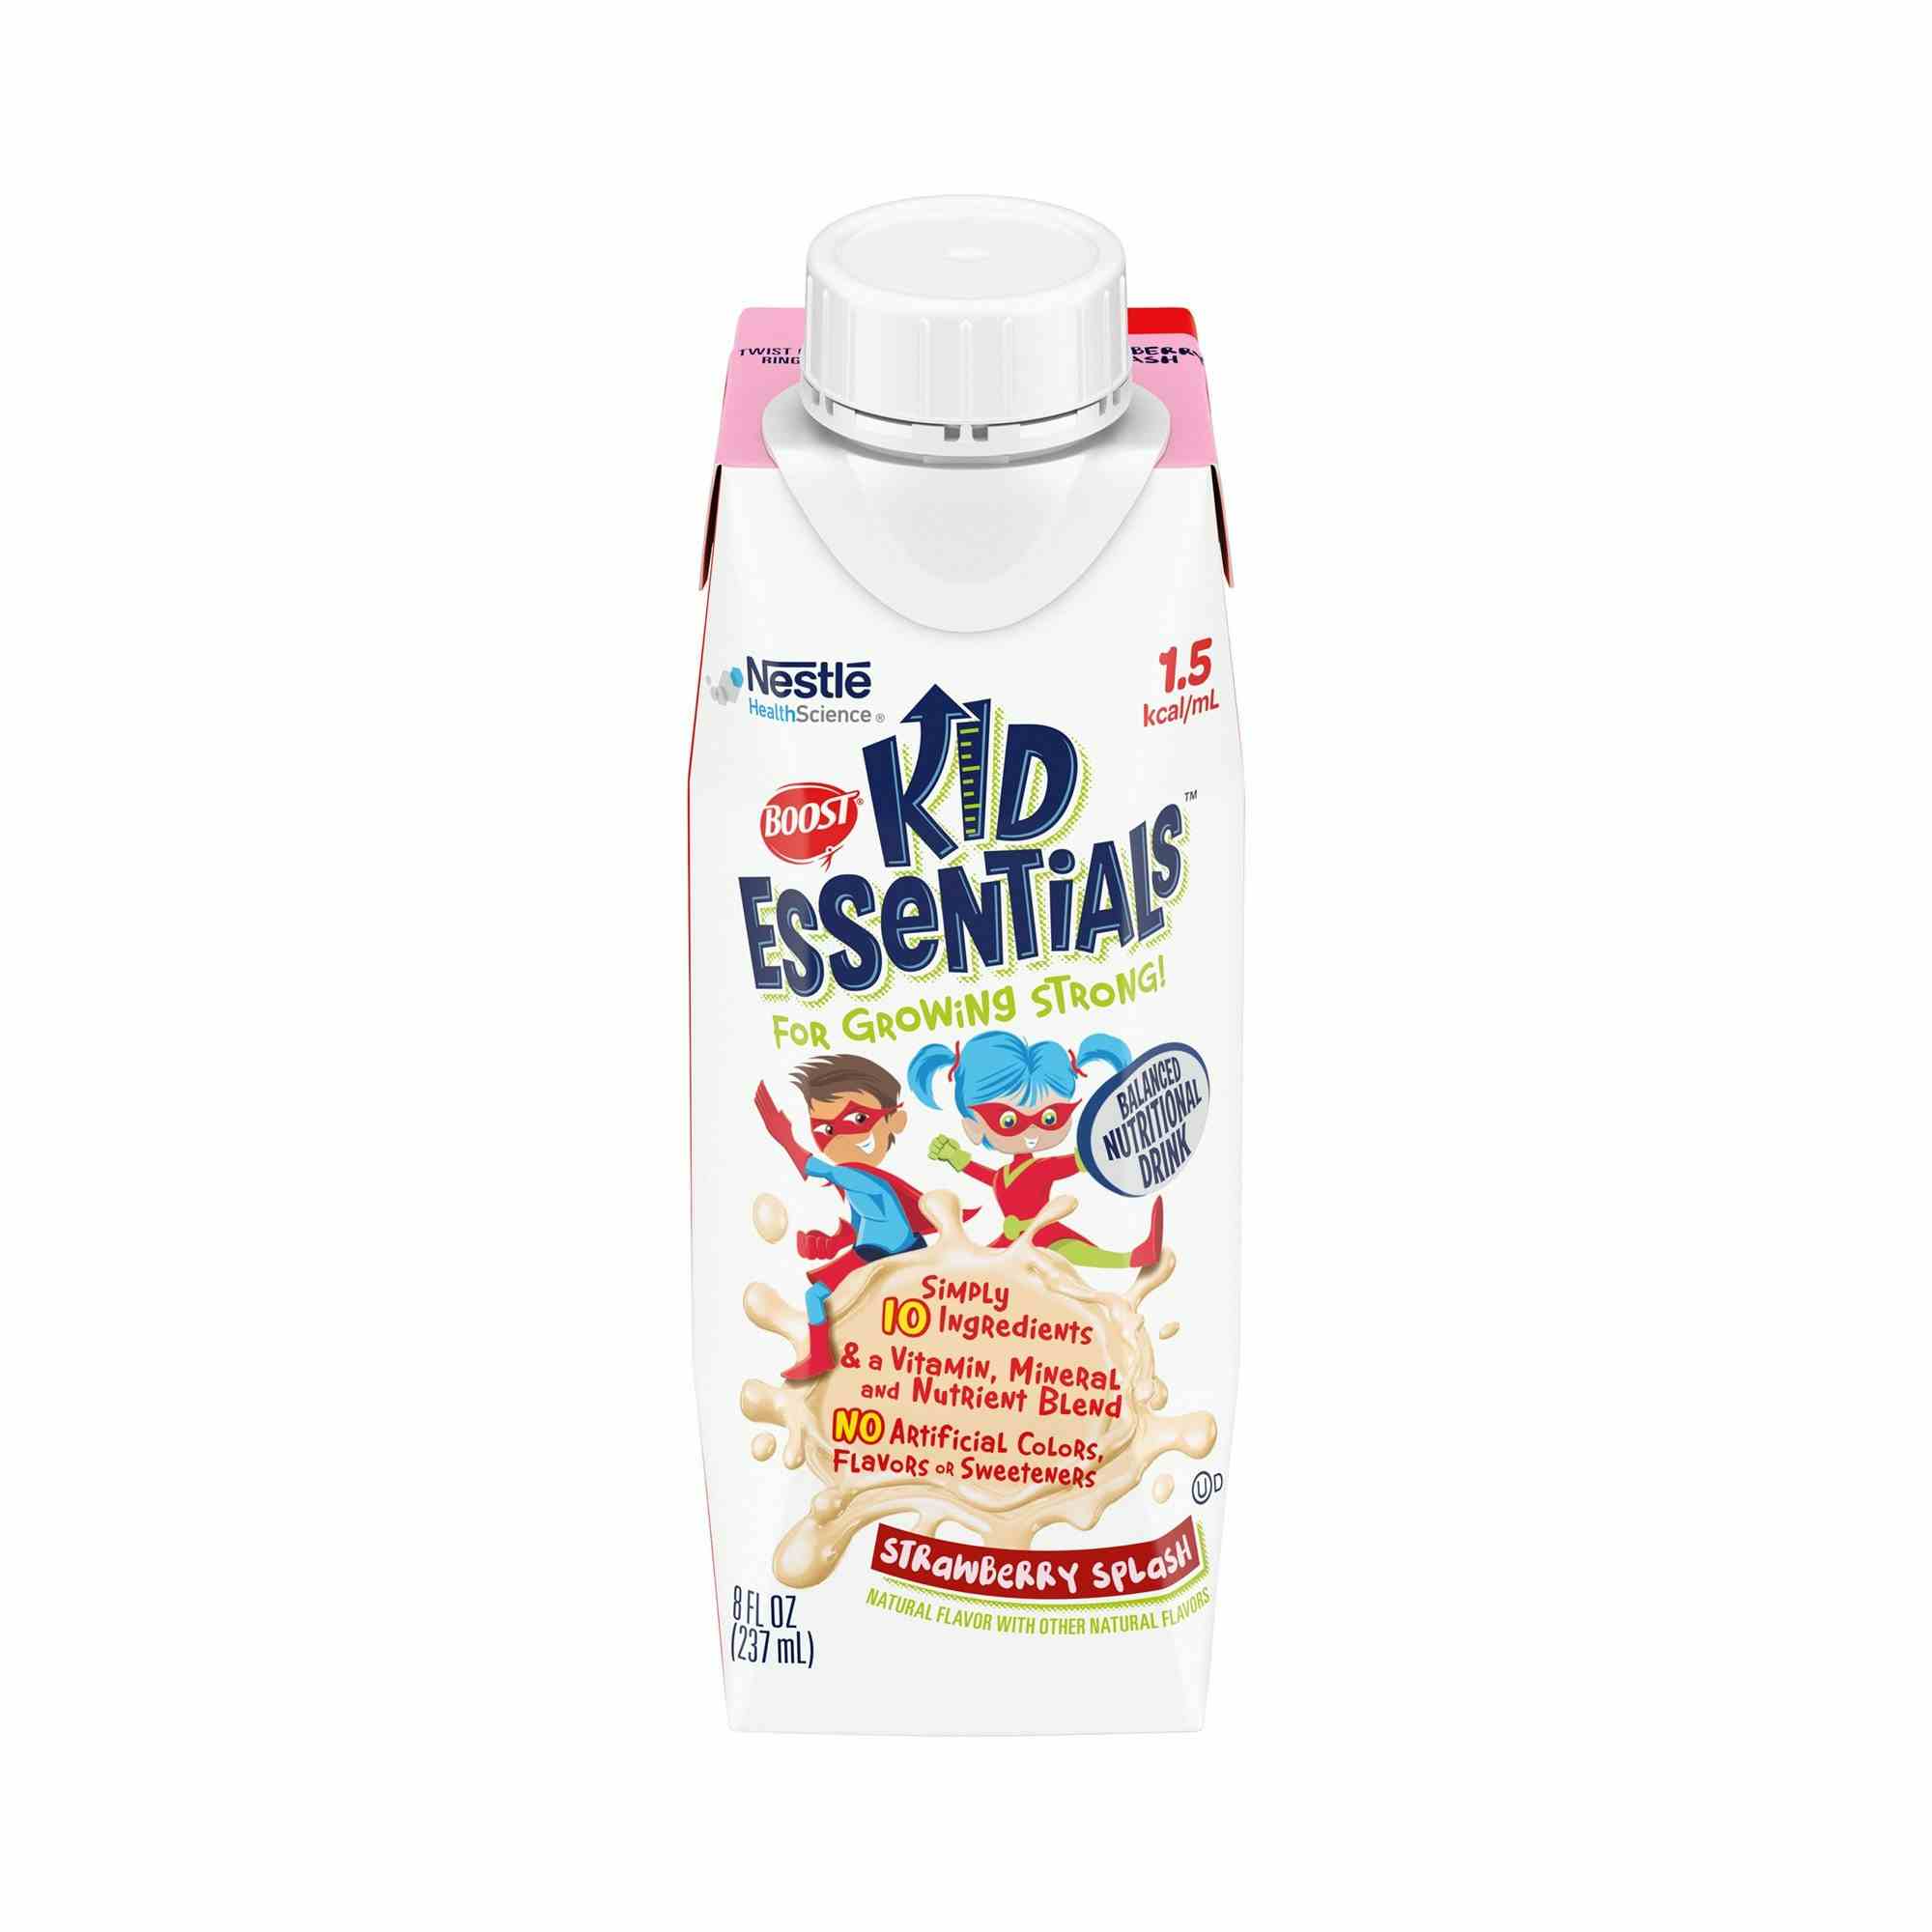 Boost Kid Essentials 1.5 Pediatric Oral Supplement/Tube Feeding Formula, Carton, Strawberry Splash, 8 oz., 00043900649948, Case of 24